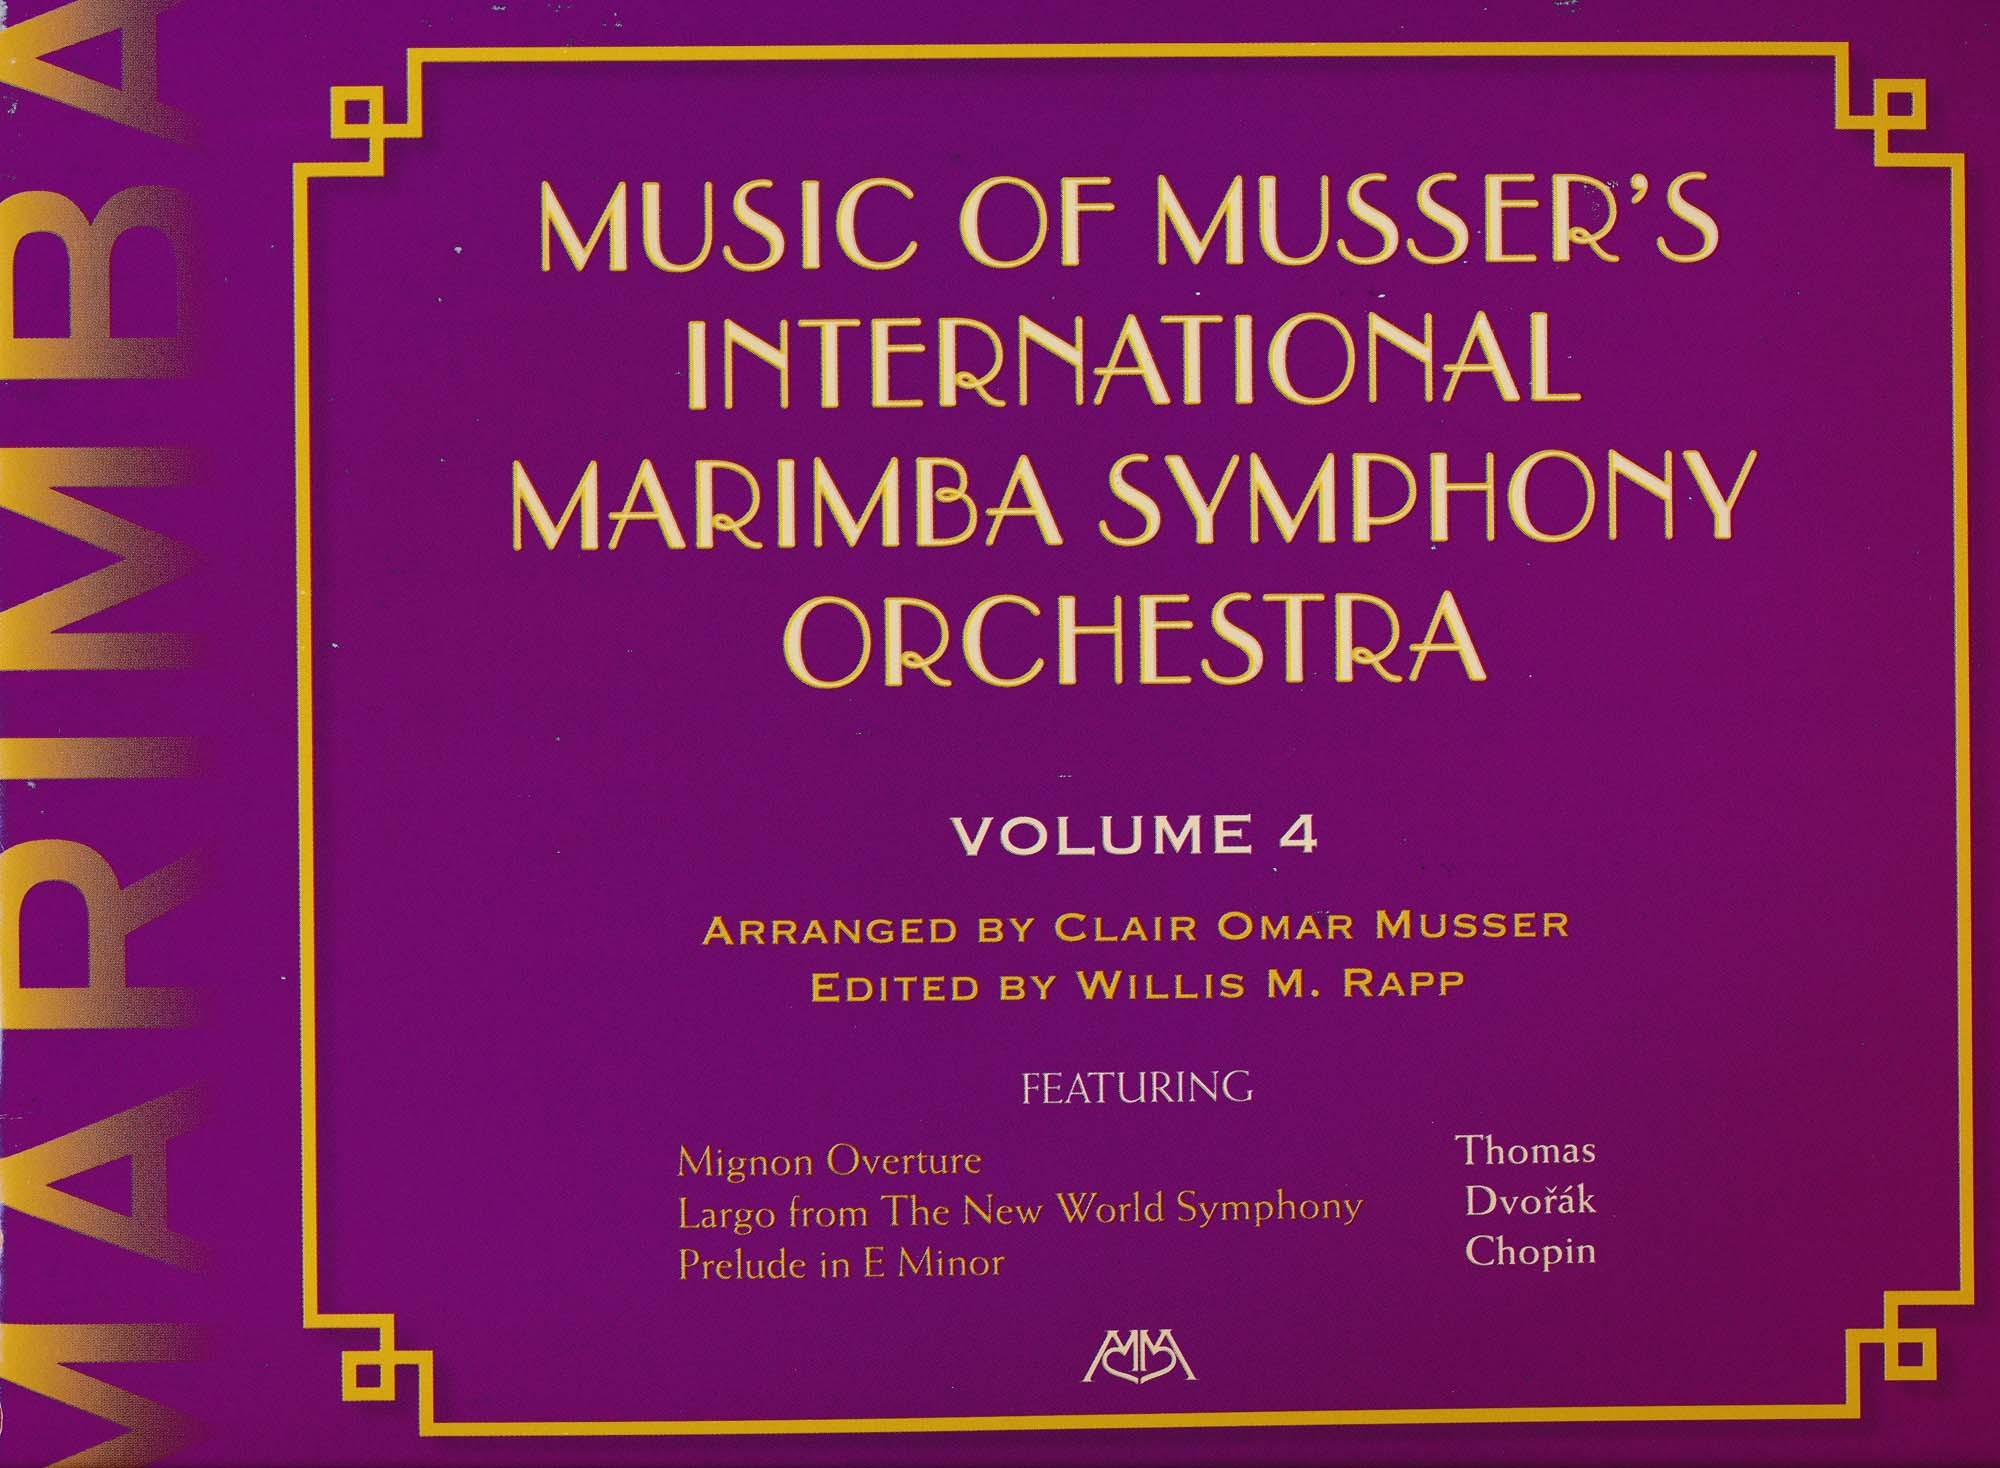 Music of Musser's International Marimba Symphony Orchestra Volume 4